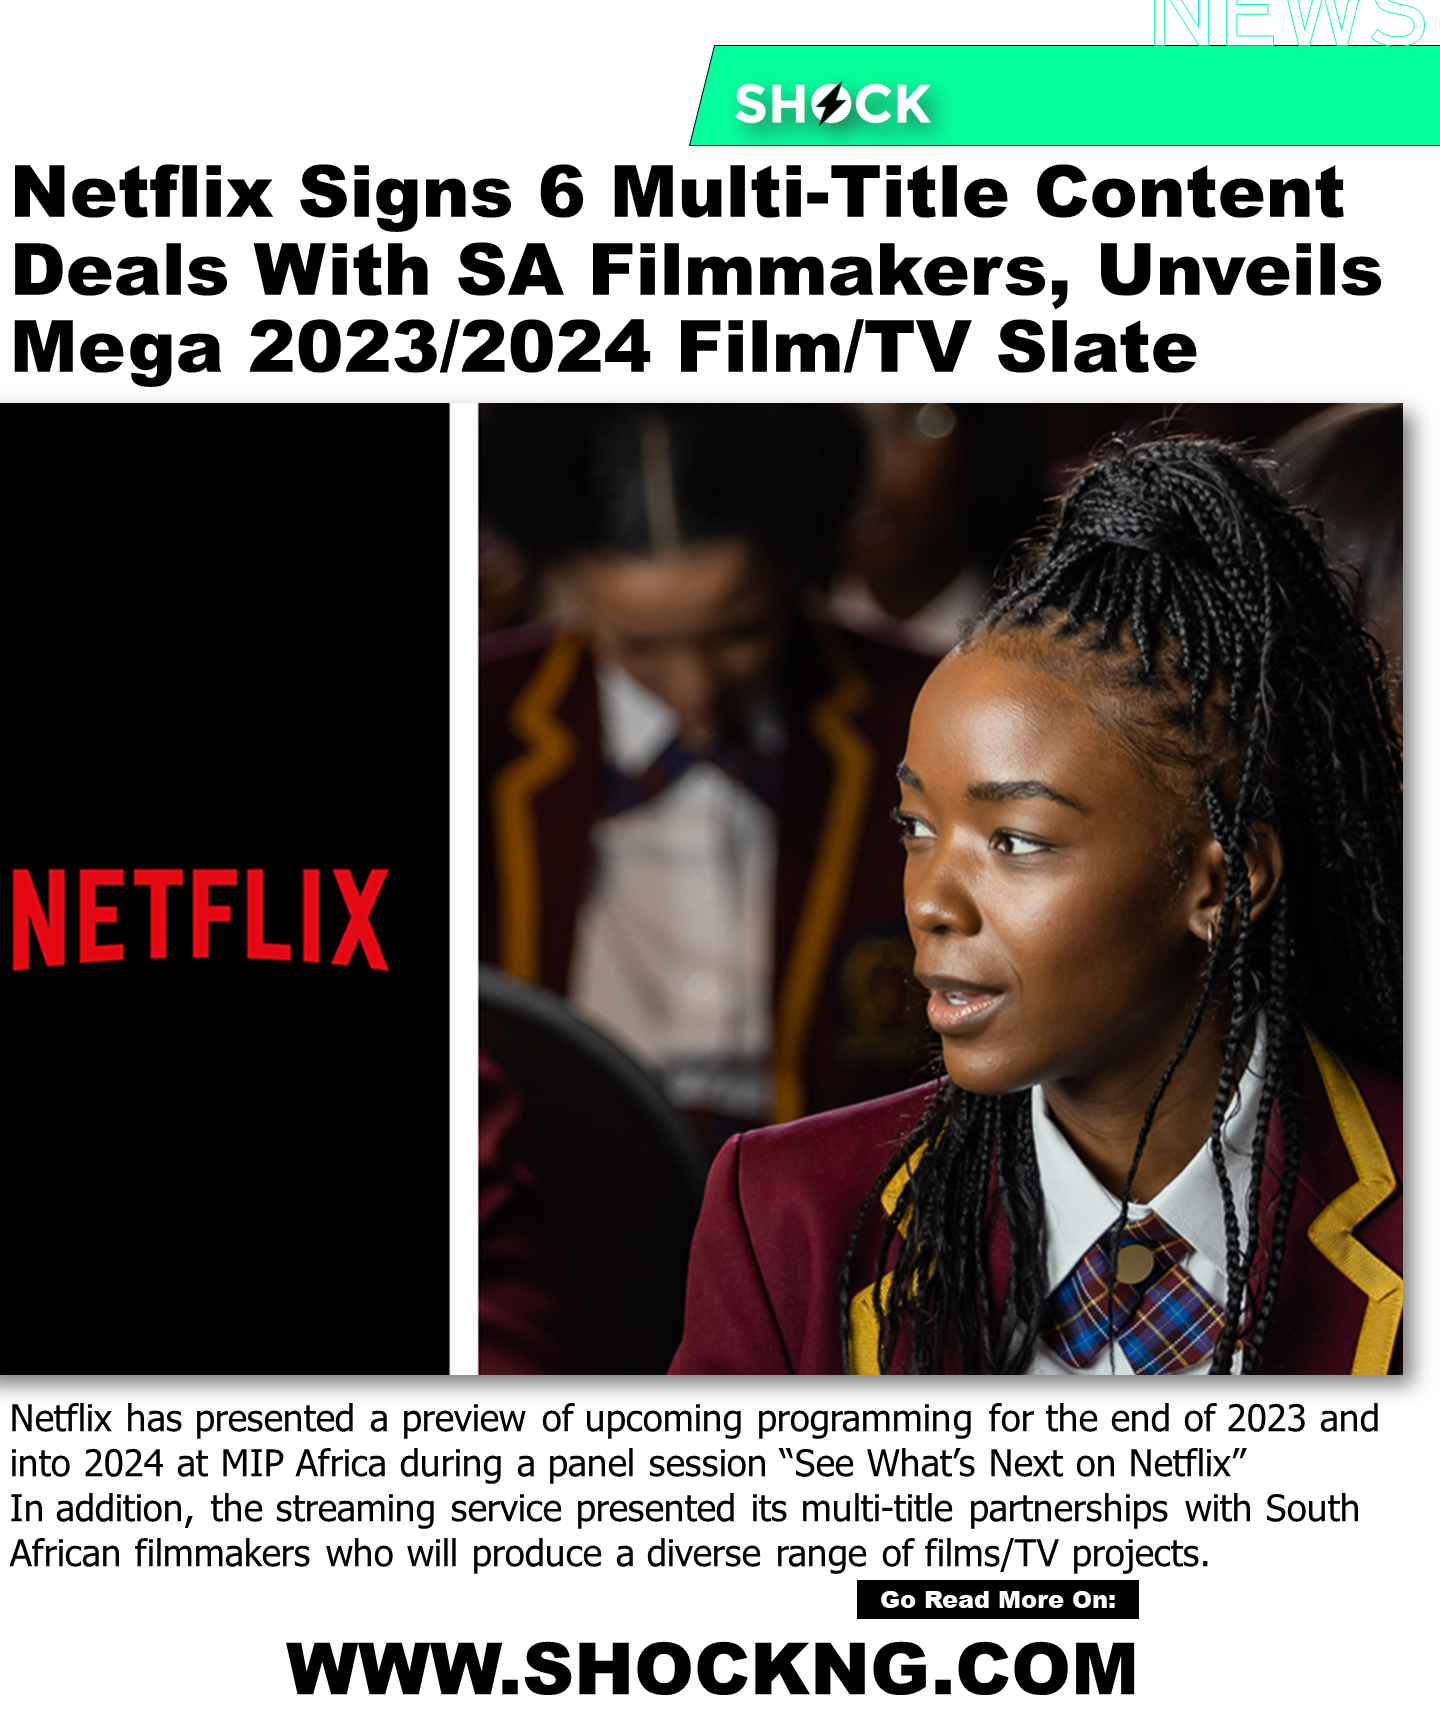 Netflix south africa 2023 2024 slate - Netflix Signs 6 Multi-Title Deals With South African Filmmakers, Unveils Mega Film/TV Slate